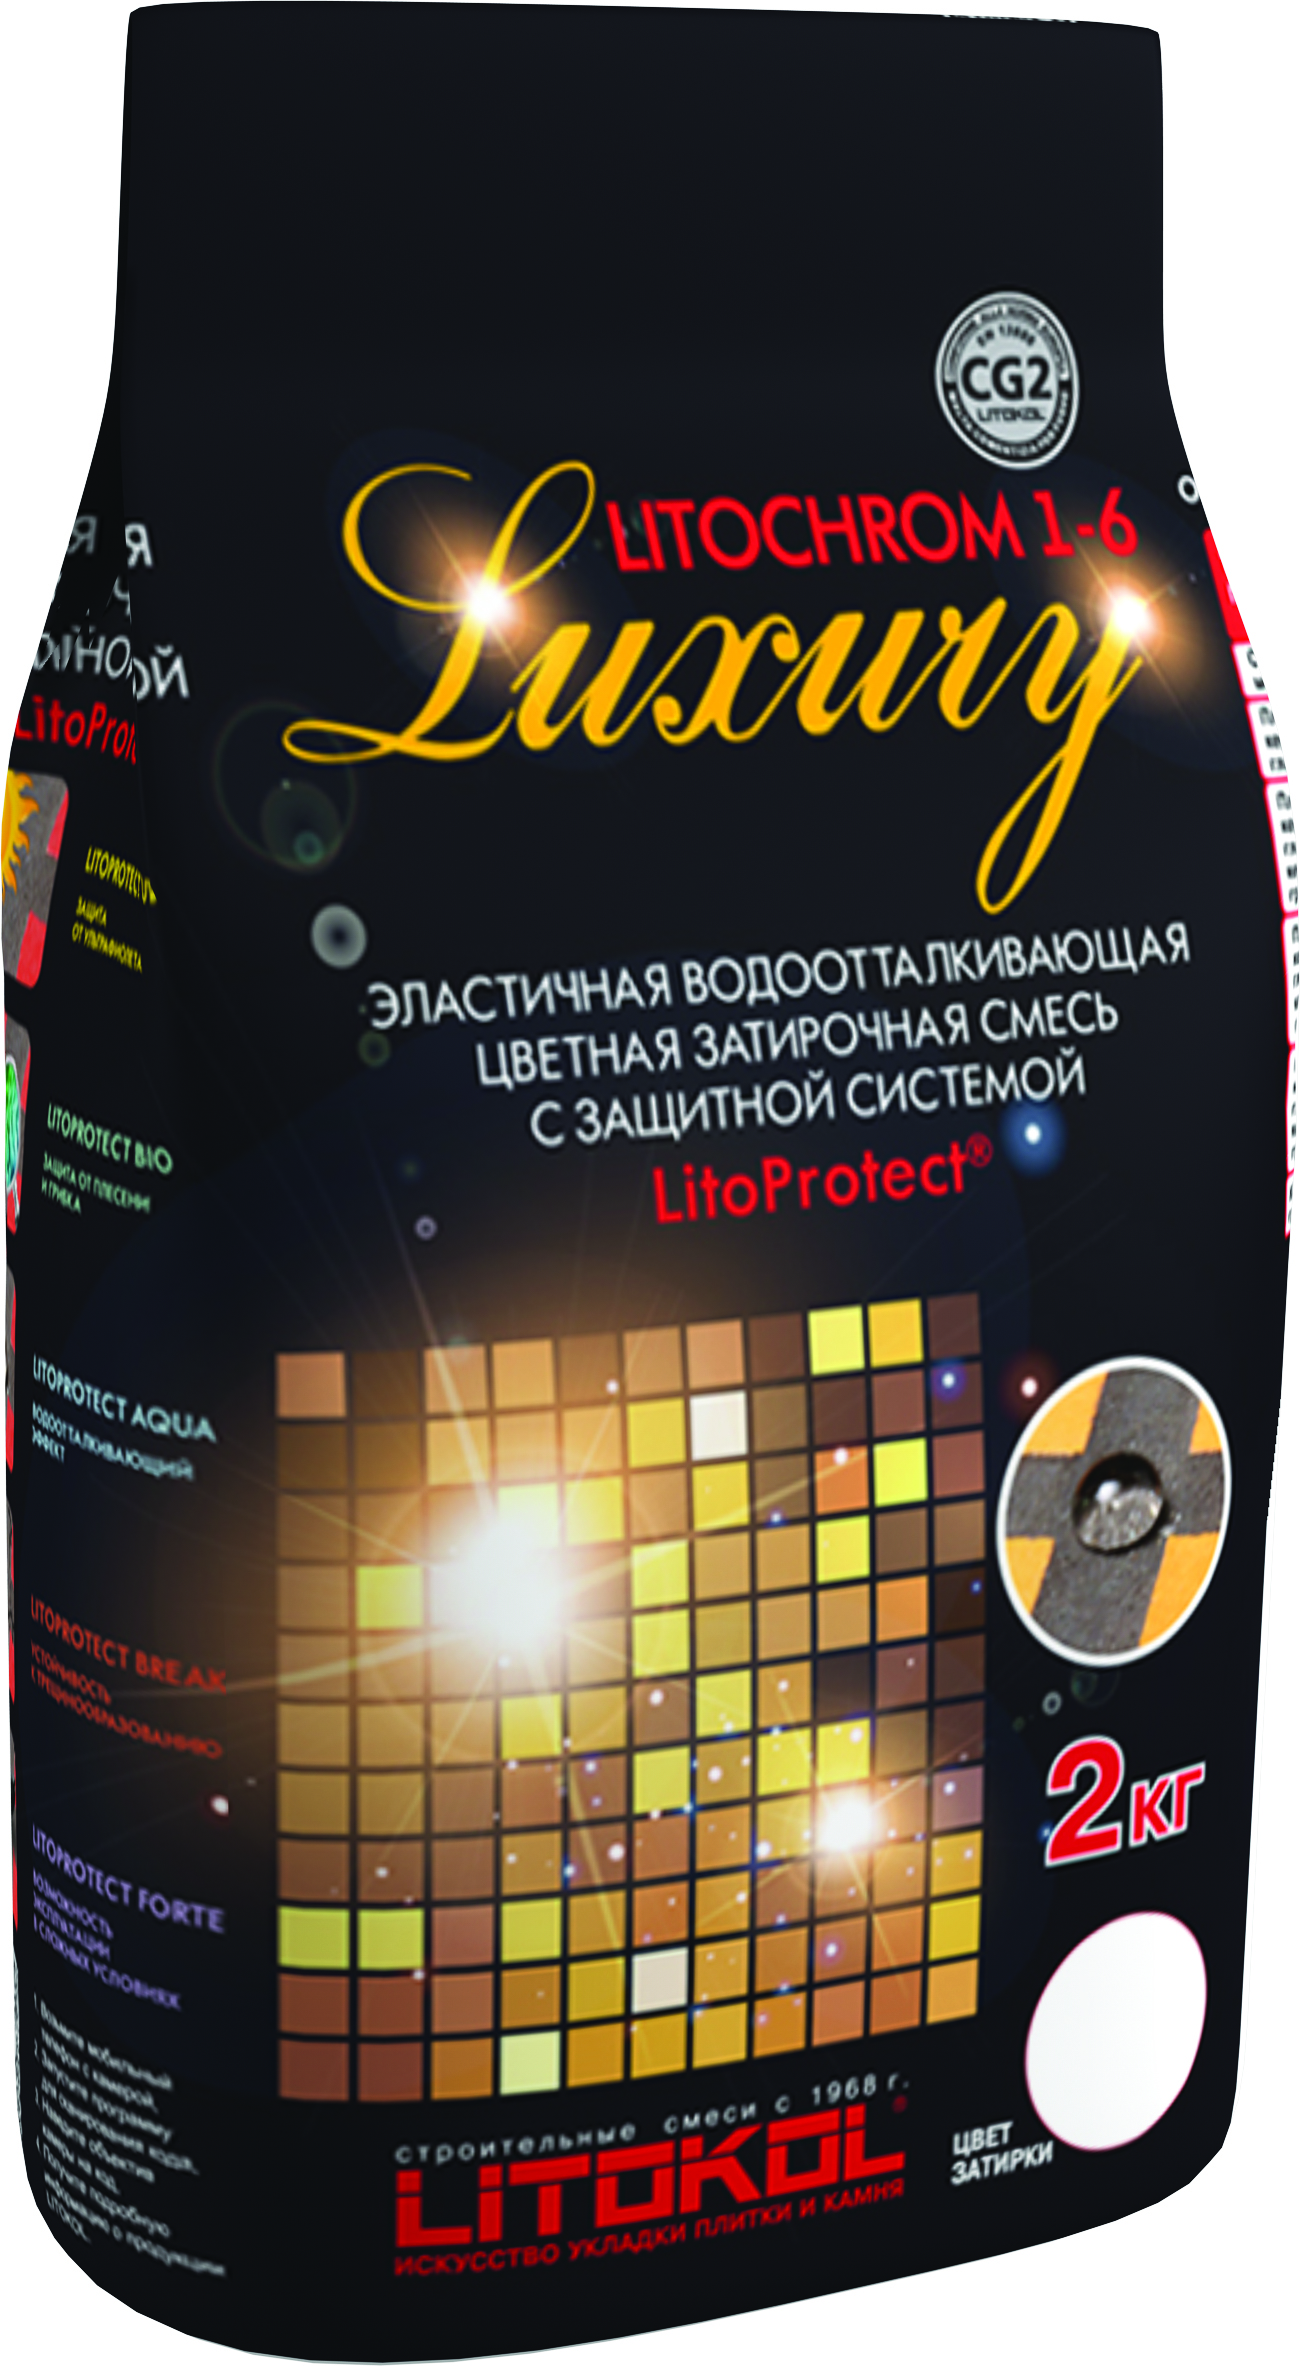 Купить Litokol Litochrom 1-6 Luxury C.650, 2 кг